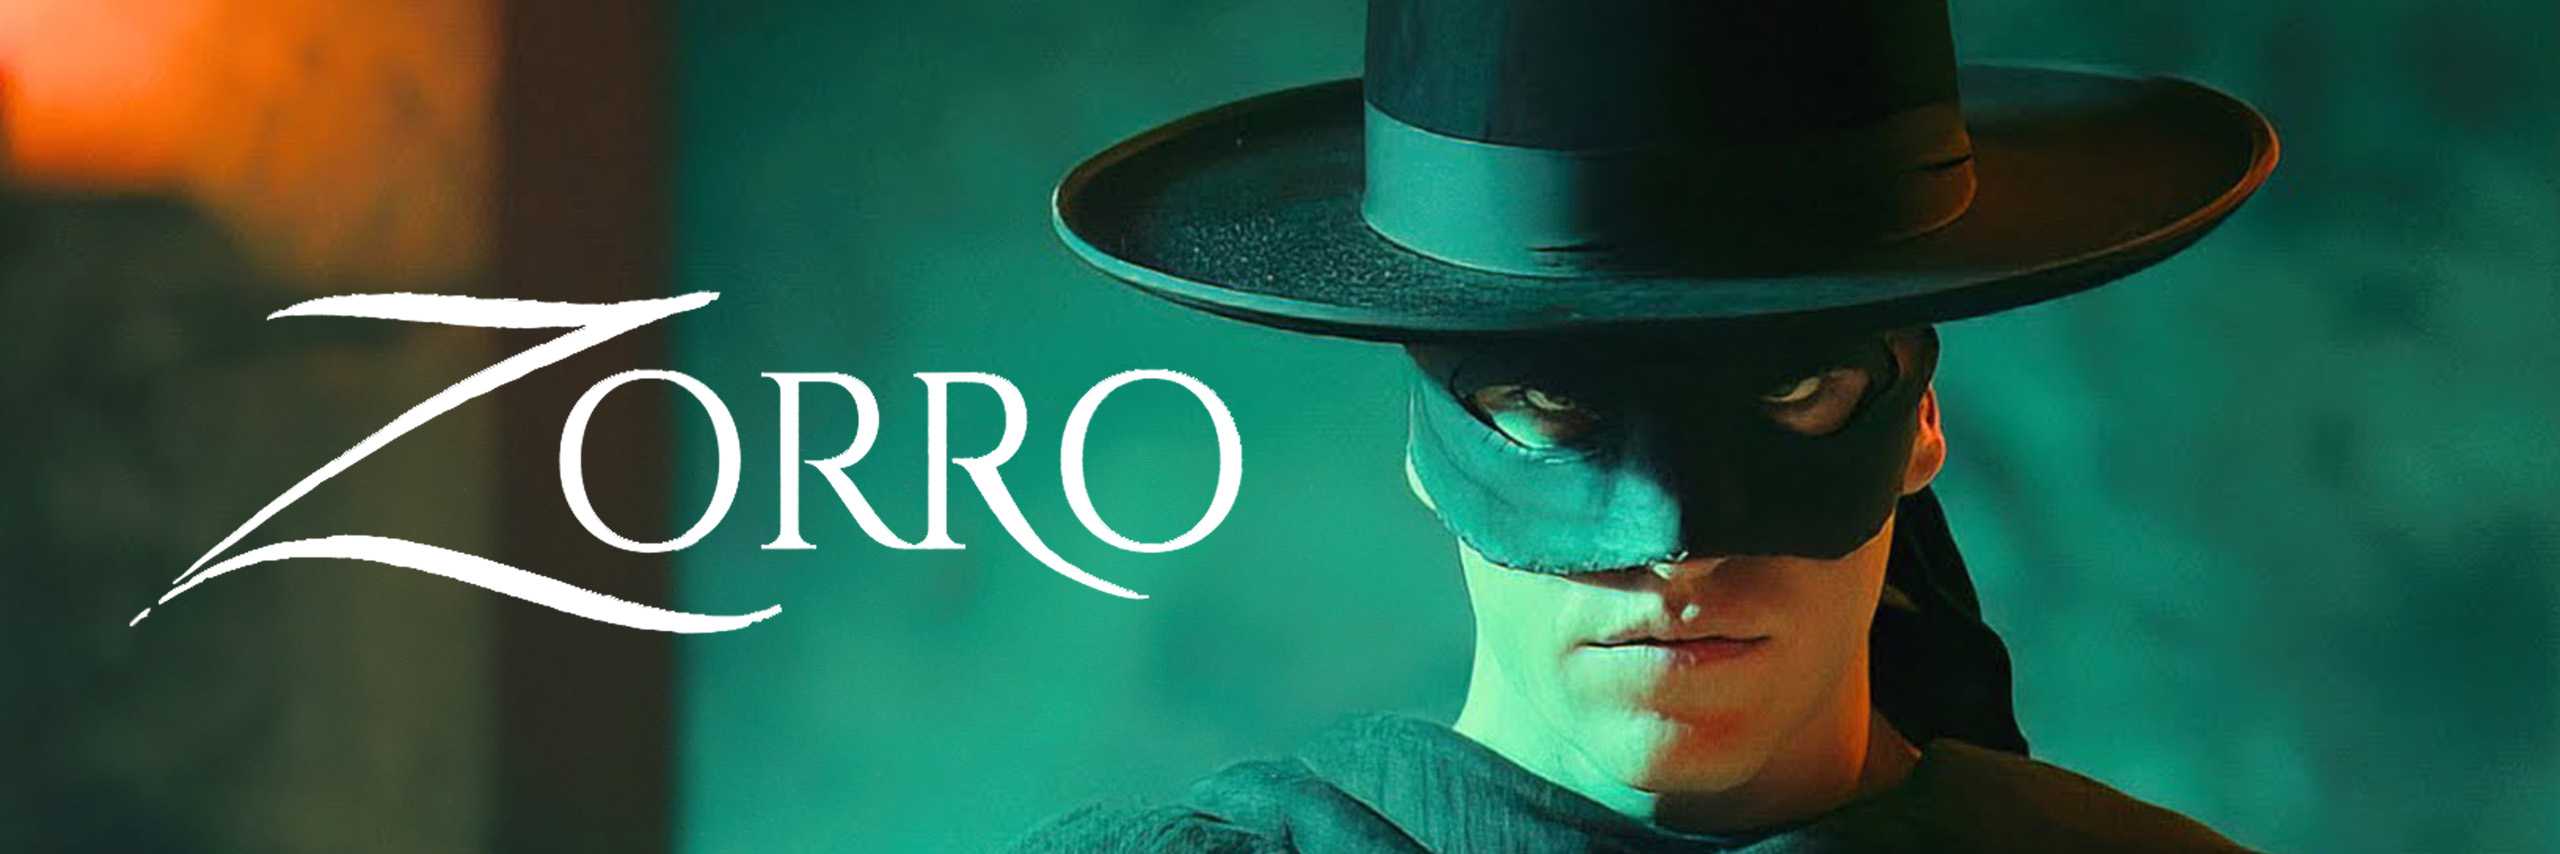 Série Zorro en streaming gratuit